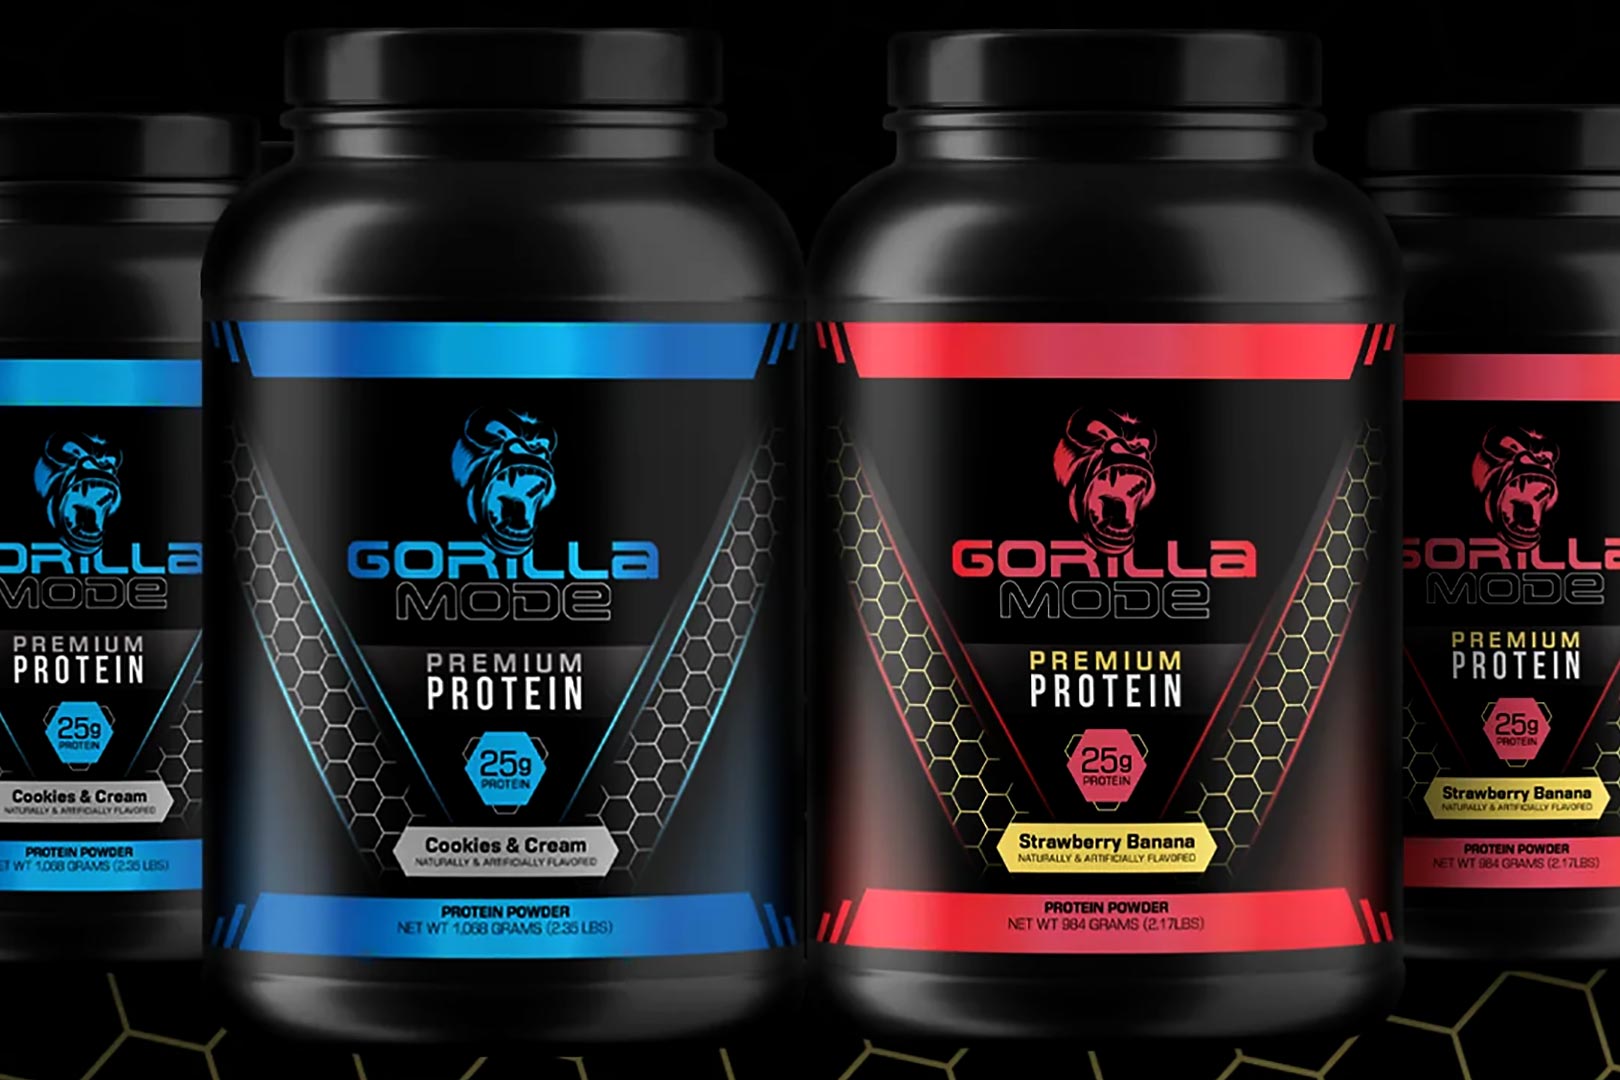 More Flavors For Gorilla Mind Transparent Protein